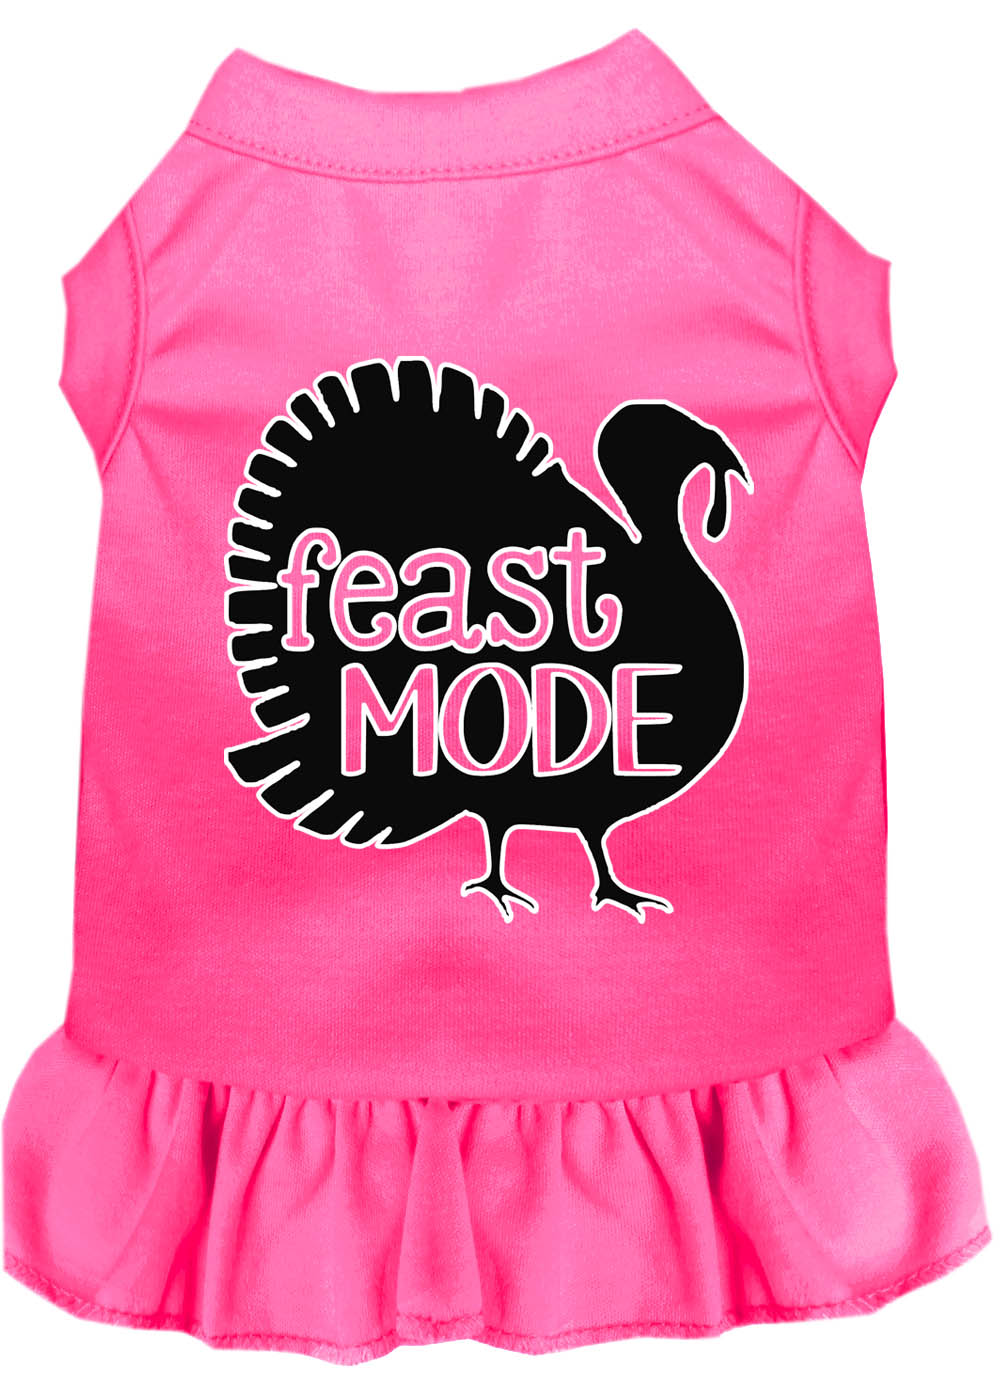 Feast Mode Screen Print Dog Dress Bright Pink Sm